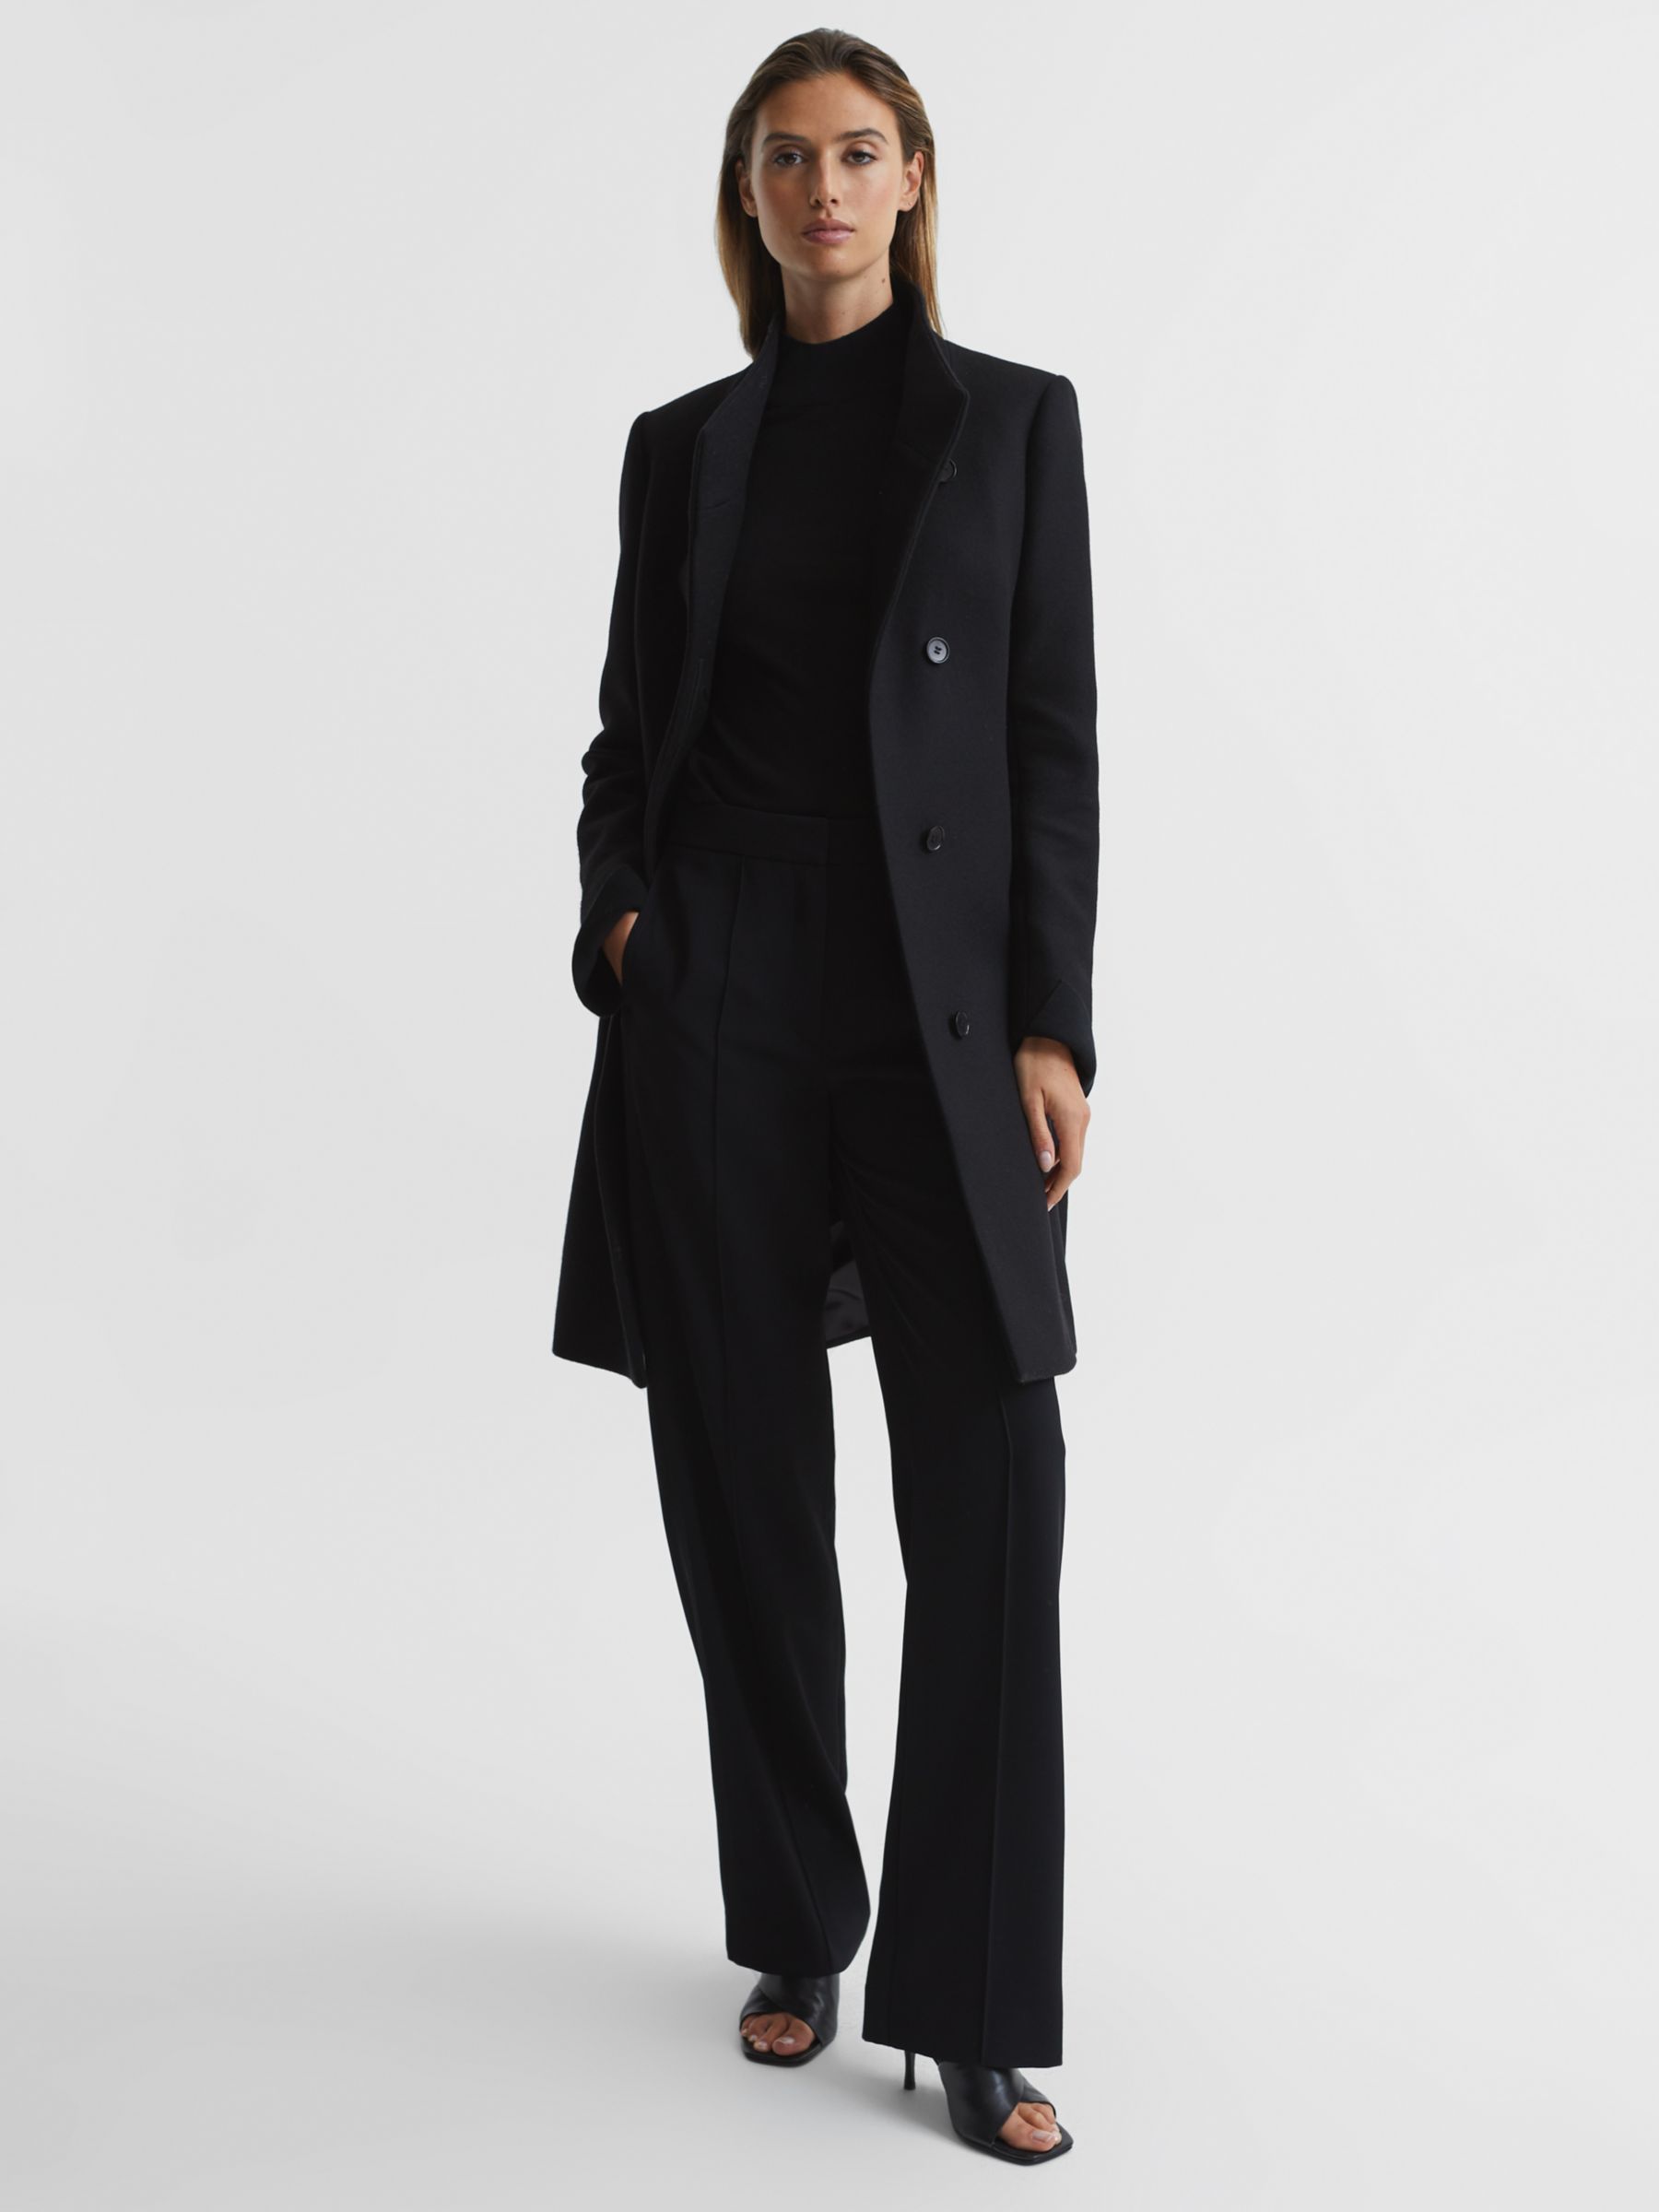 Black wool blend coat · Black · Coats And Jackets